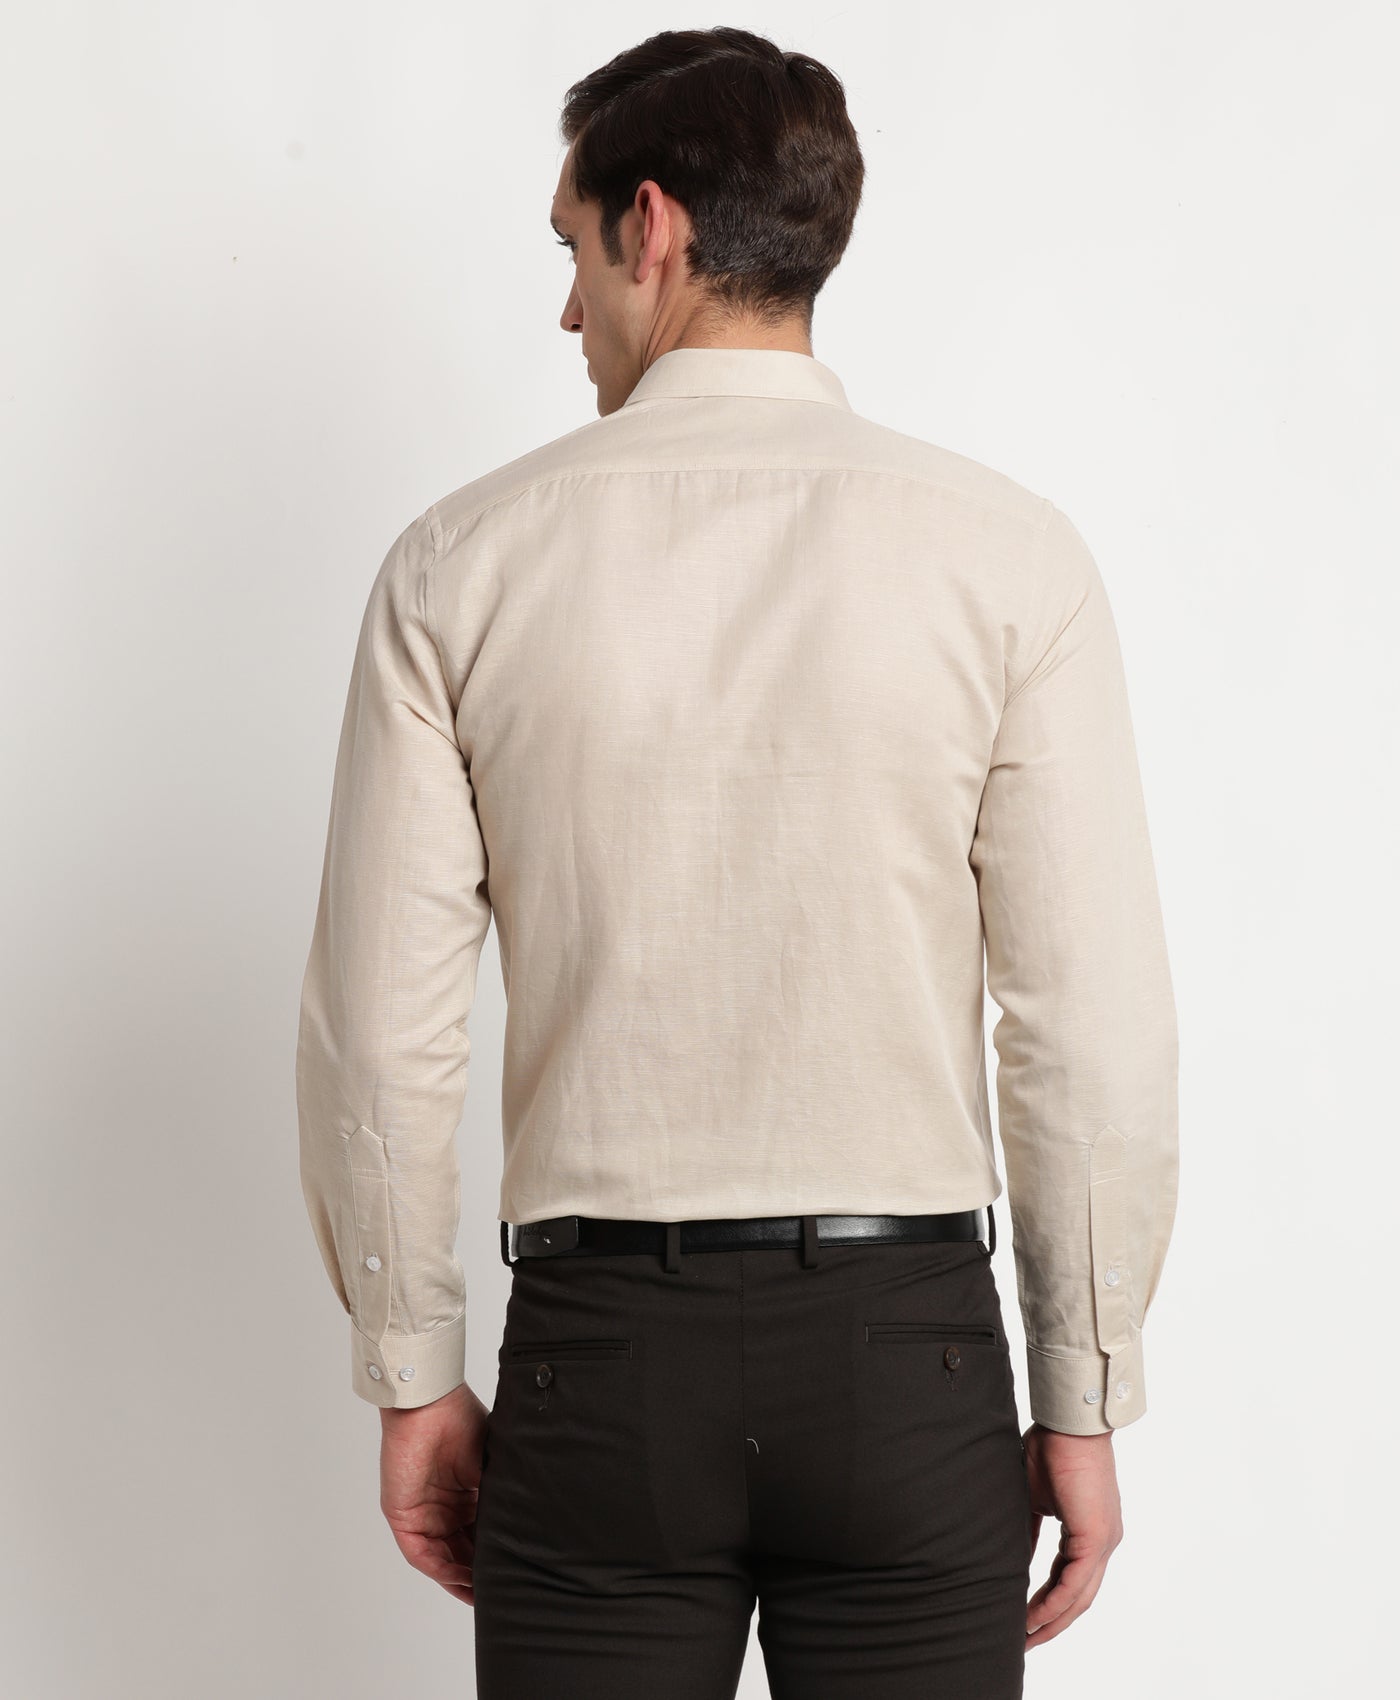 Cotton Linen Beige Plain Slim Fit Full Sleeve Formal Shirt